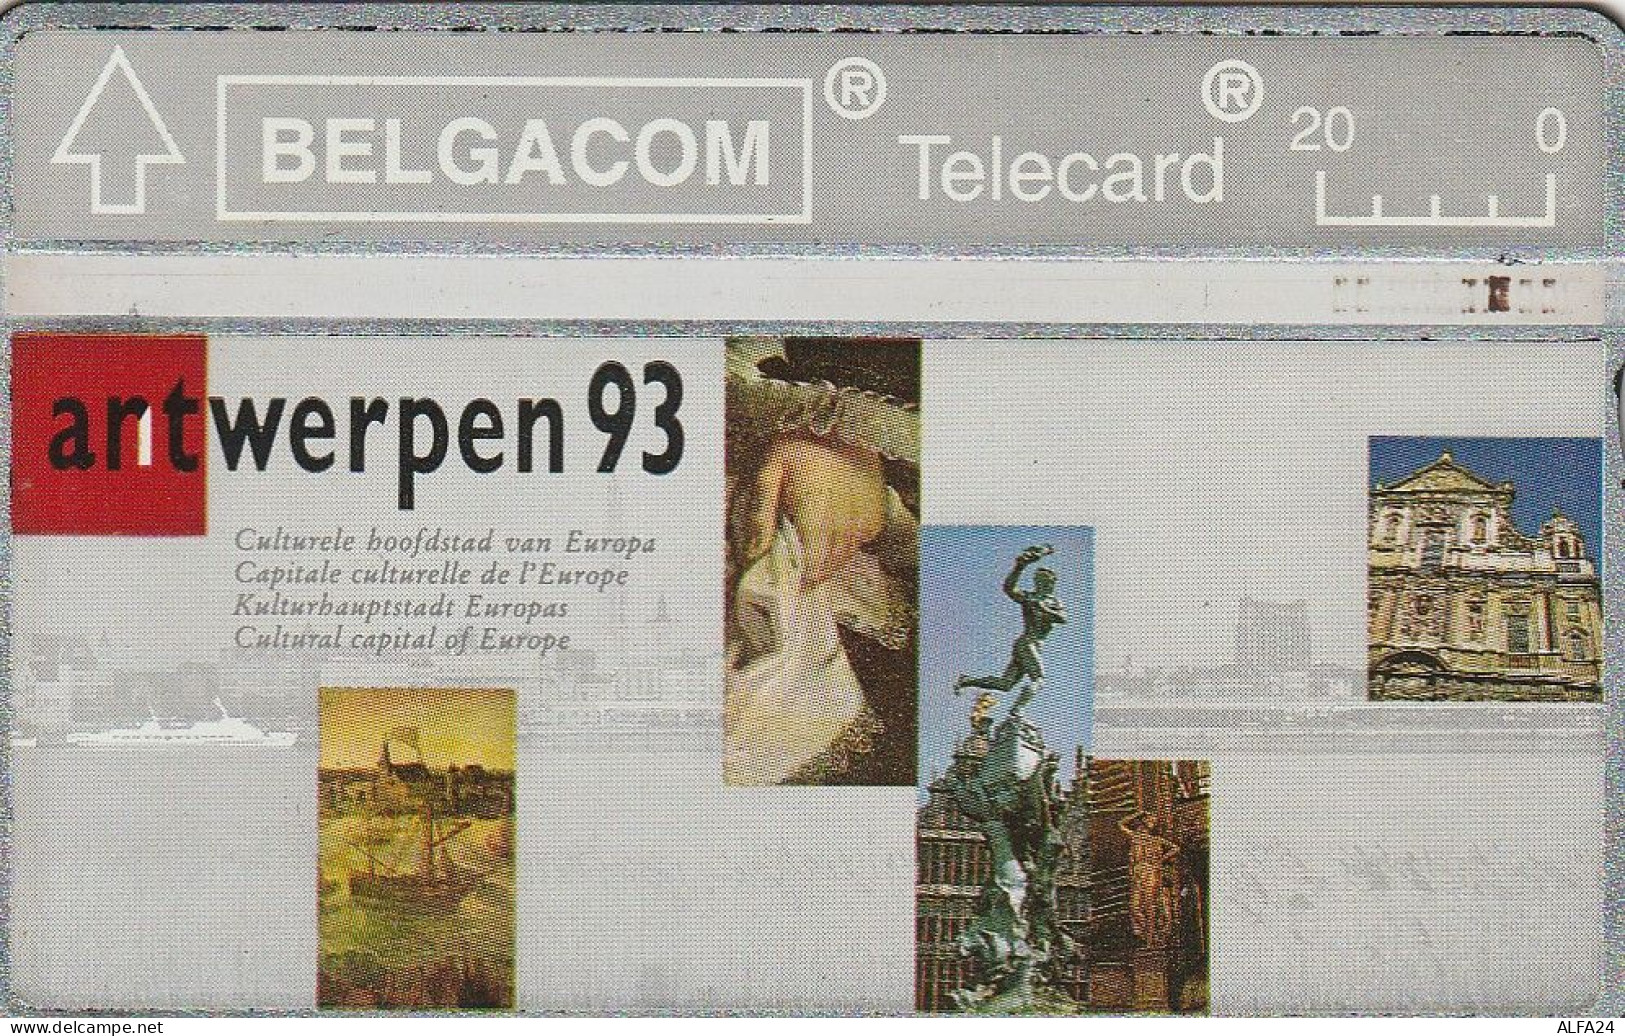 PHONE CARD BELGIO LG (CV6675 - Senza Chip